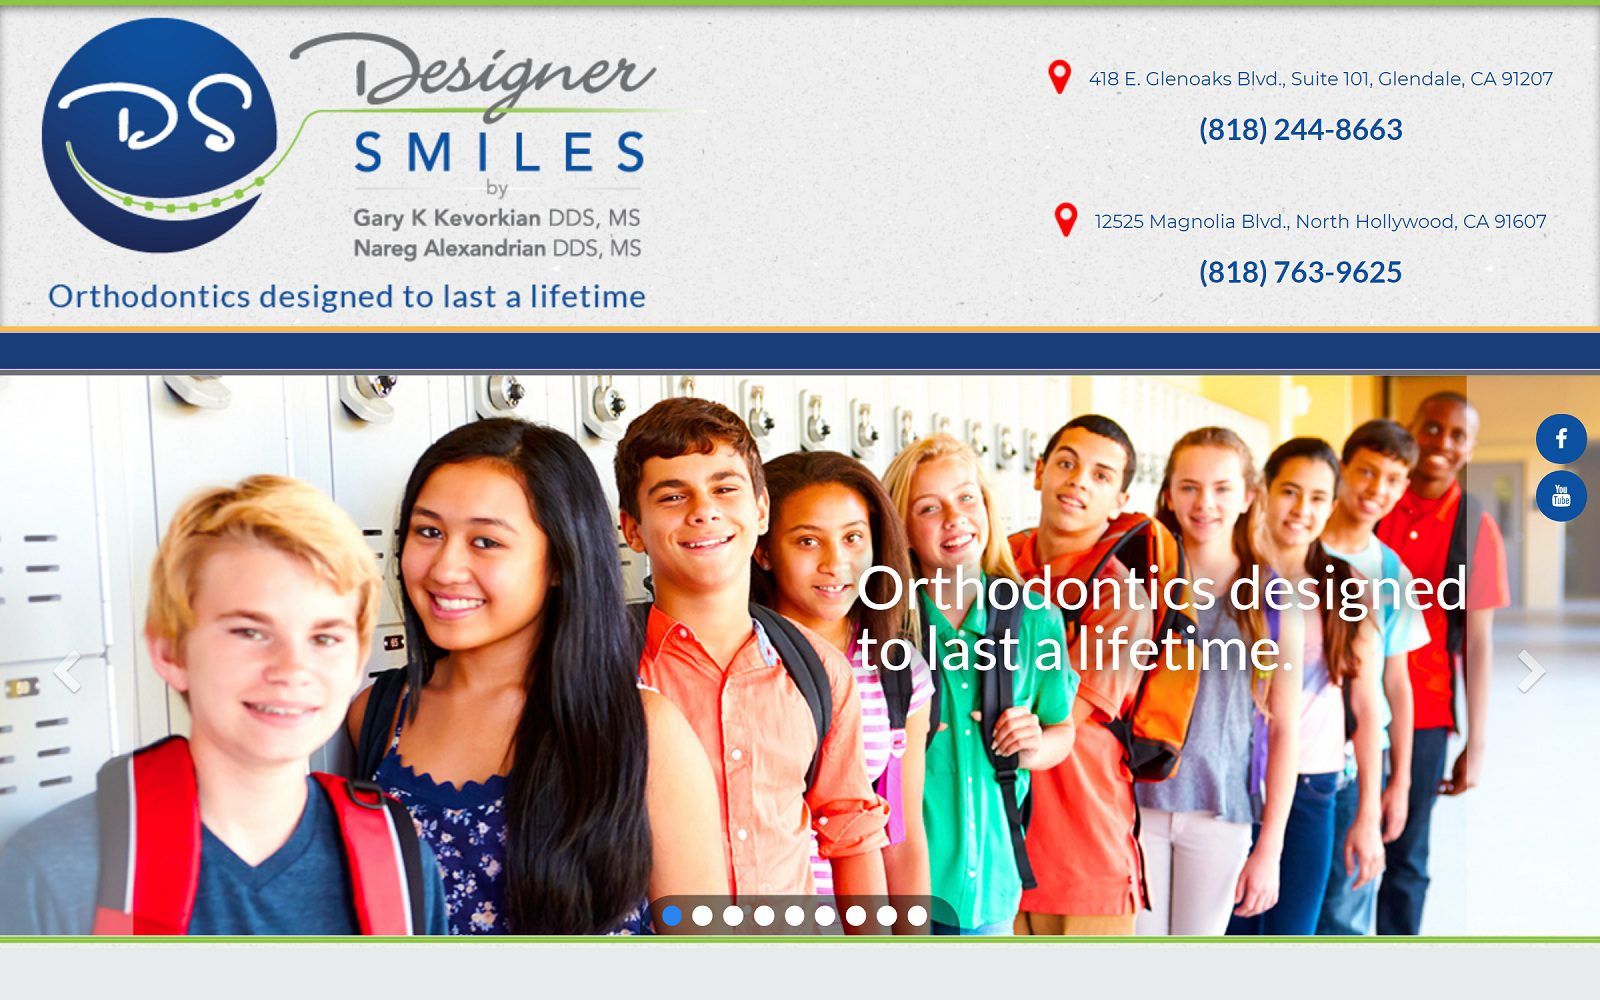 The screenshot of designersmiles orthodontics designersmiles. Com website